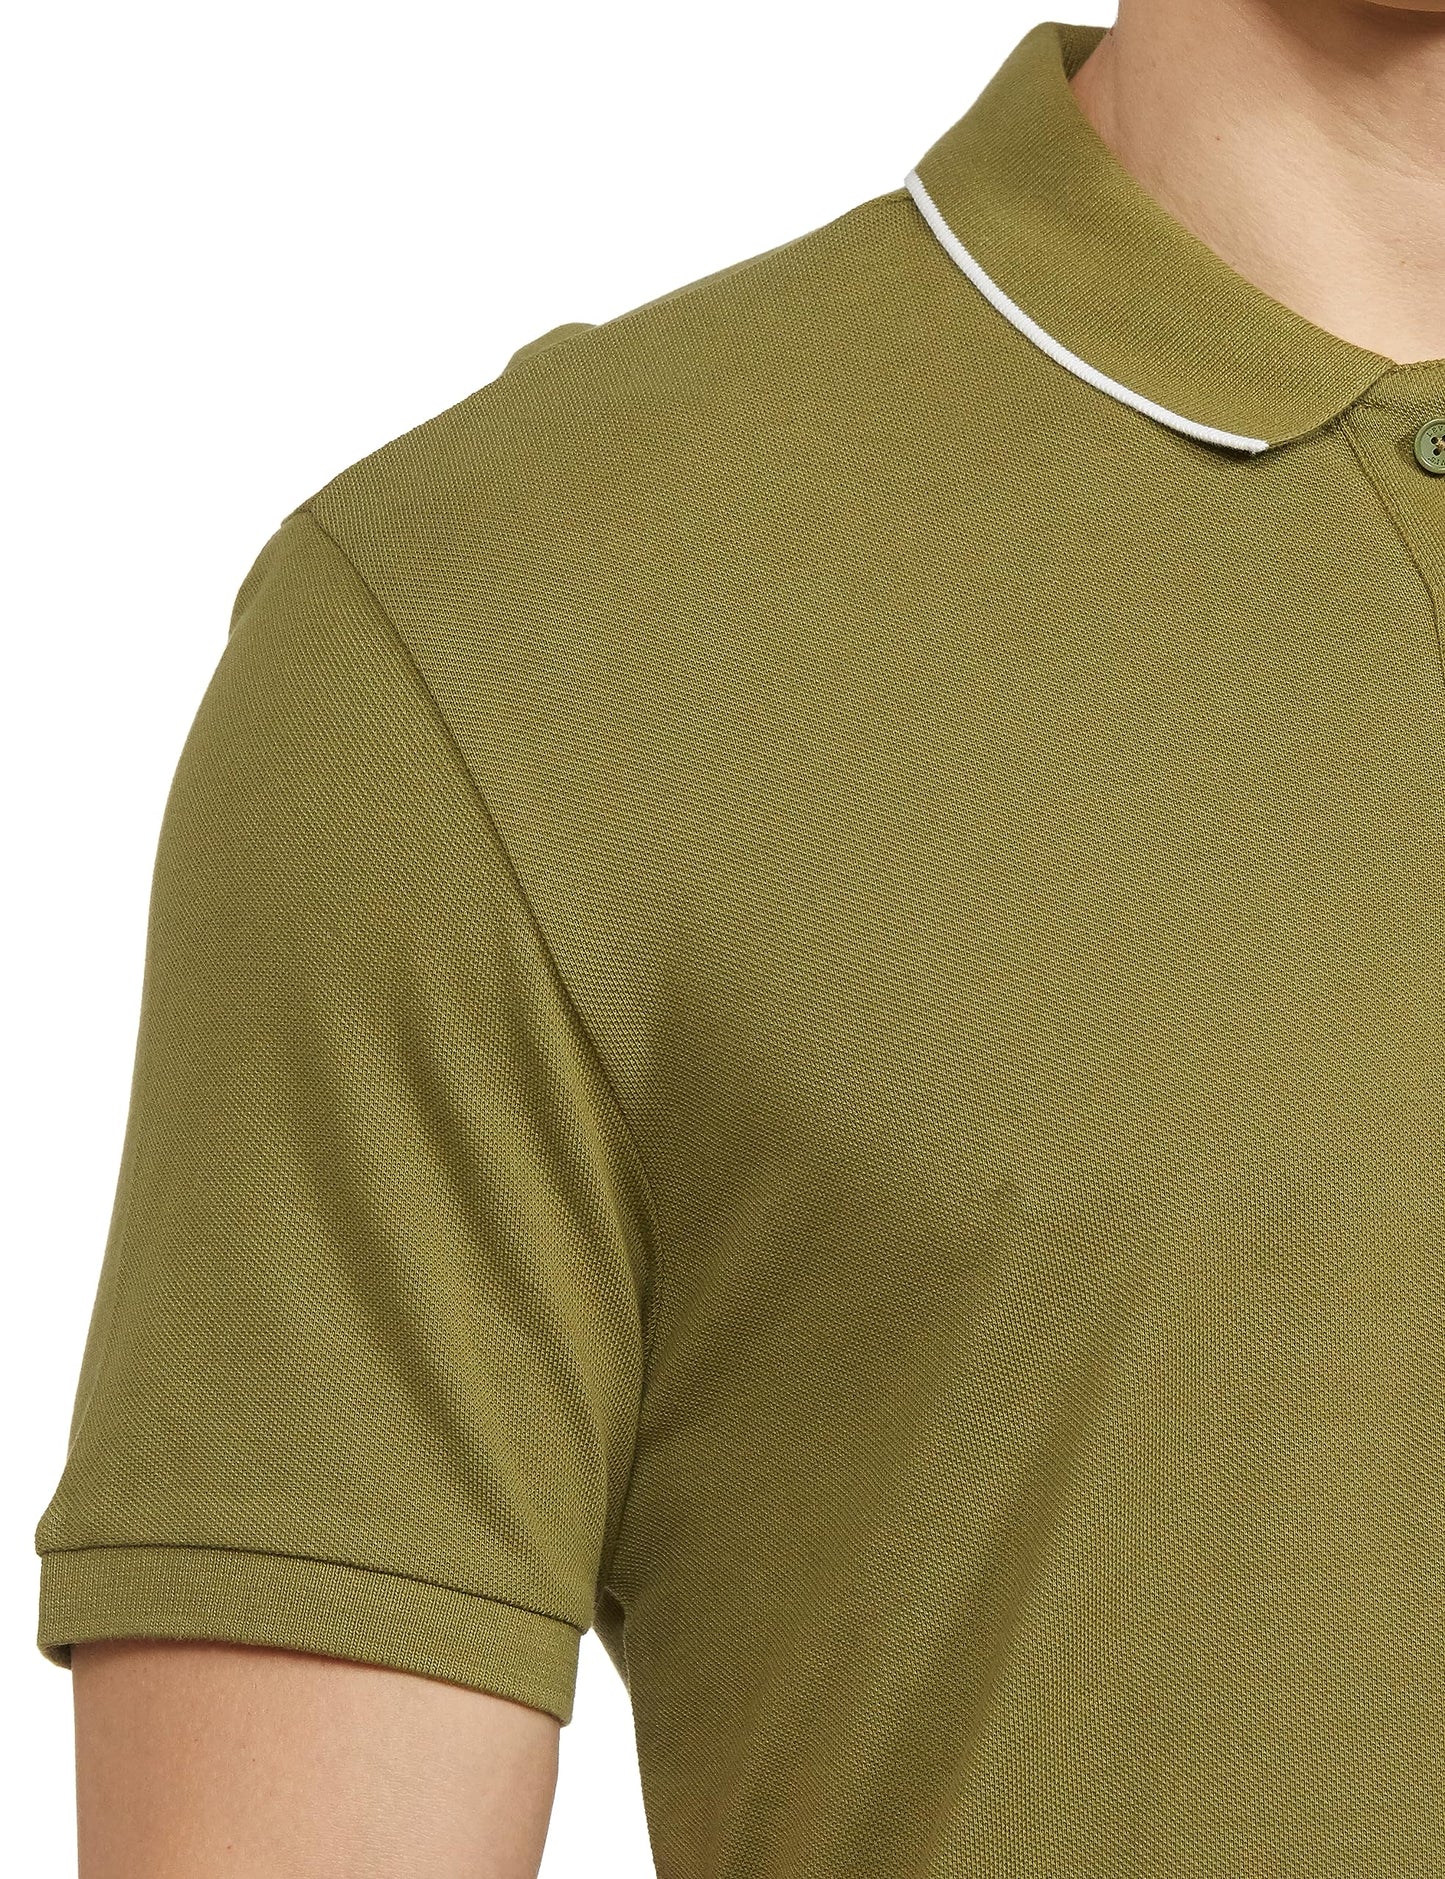 Levi's Men's Regular Fit T-Shirt (A1383-0110_Green)